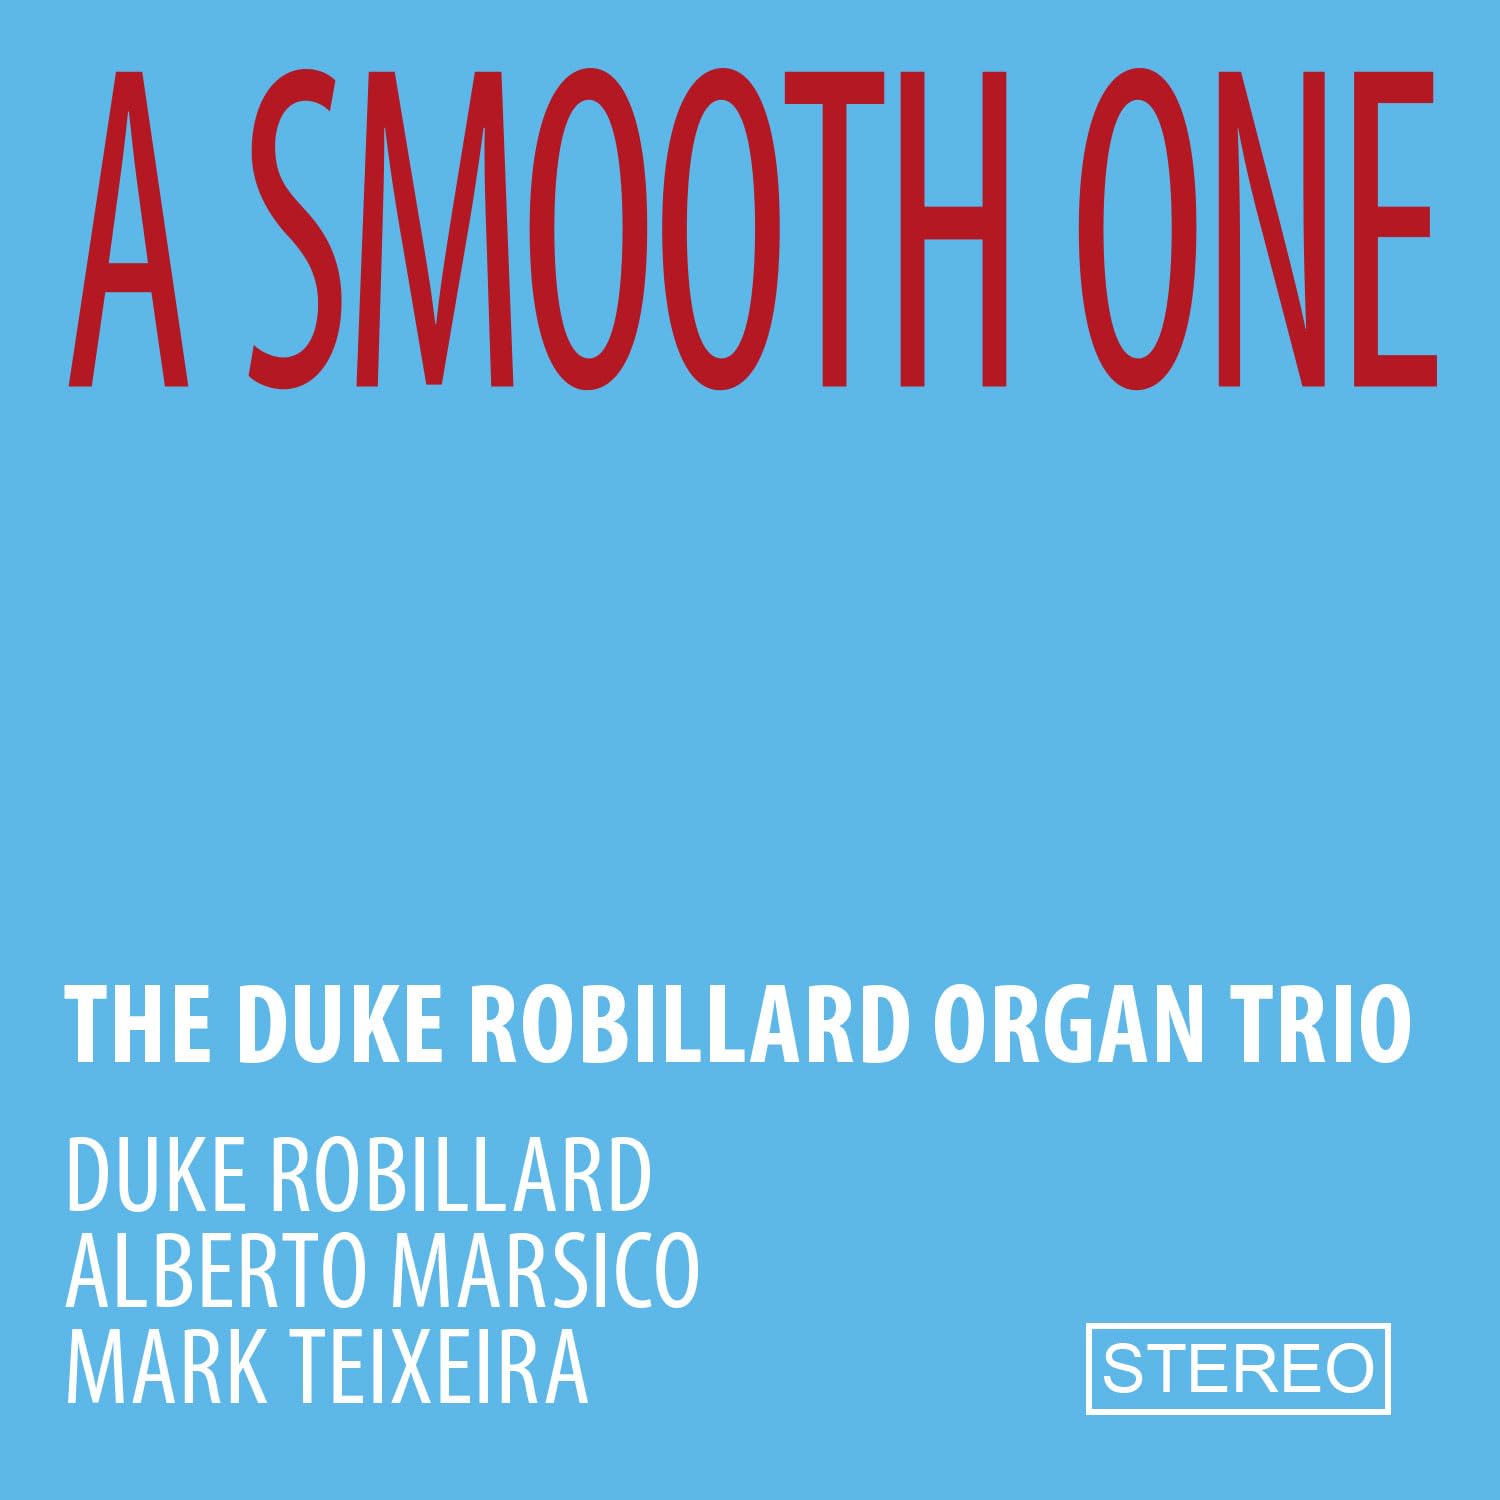 DUKE ROBILLARD - The Duke Robillard Organ Trio : Smooth One cover 